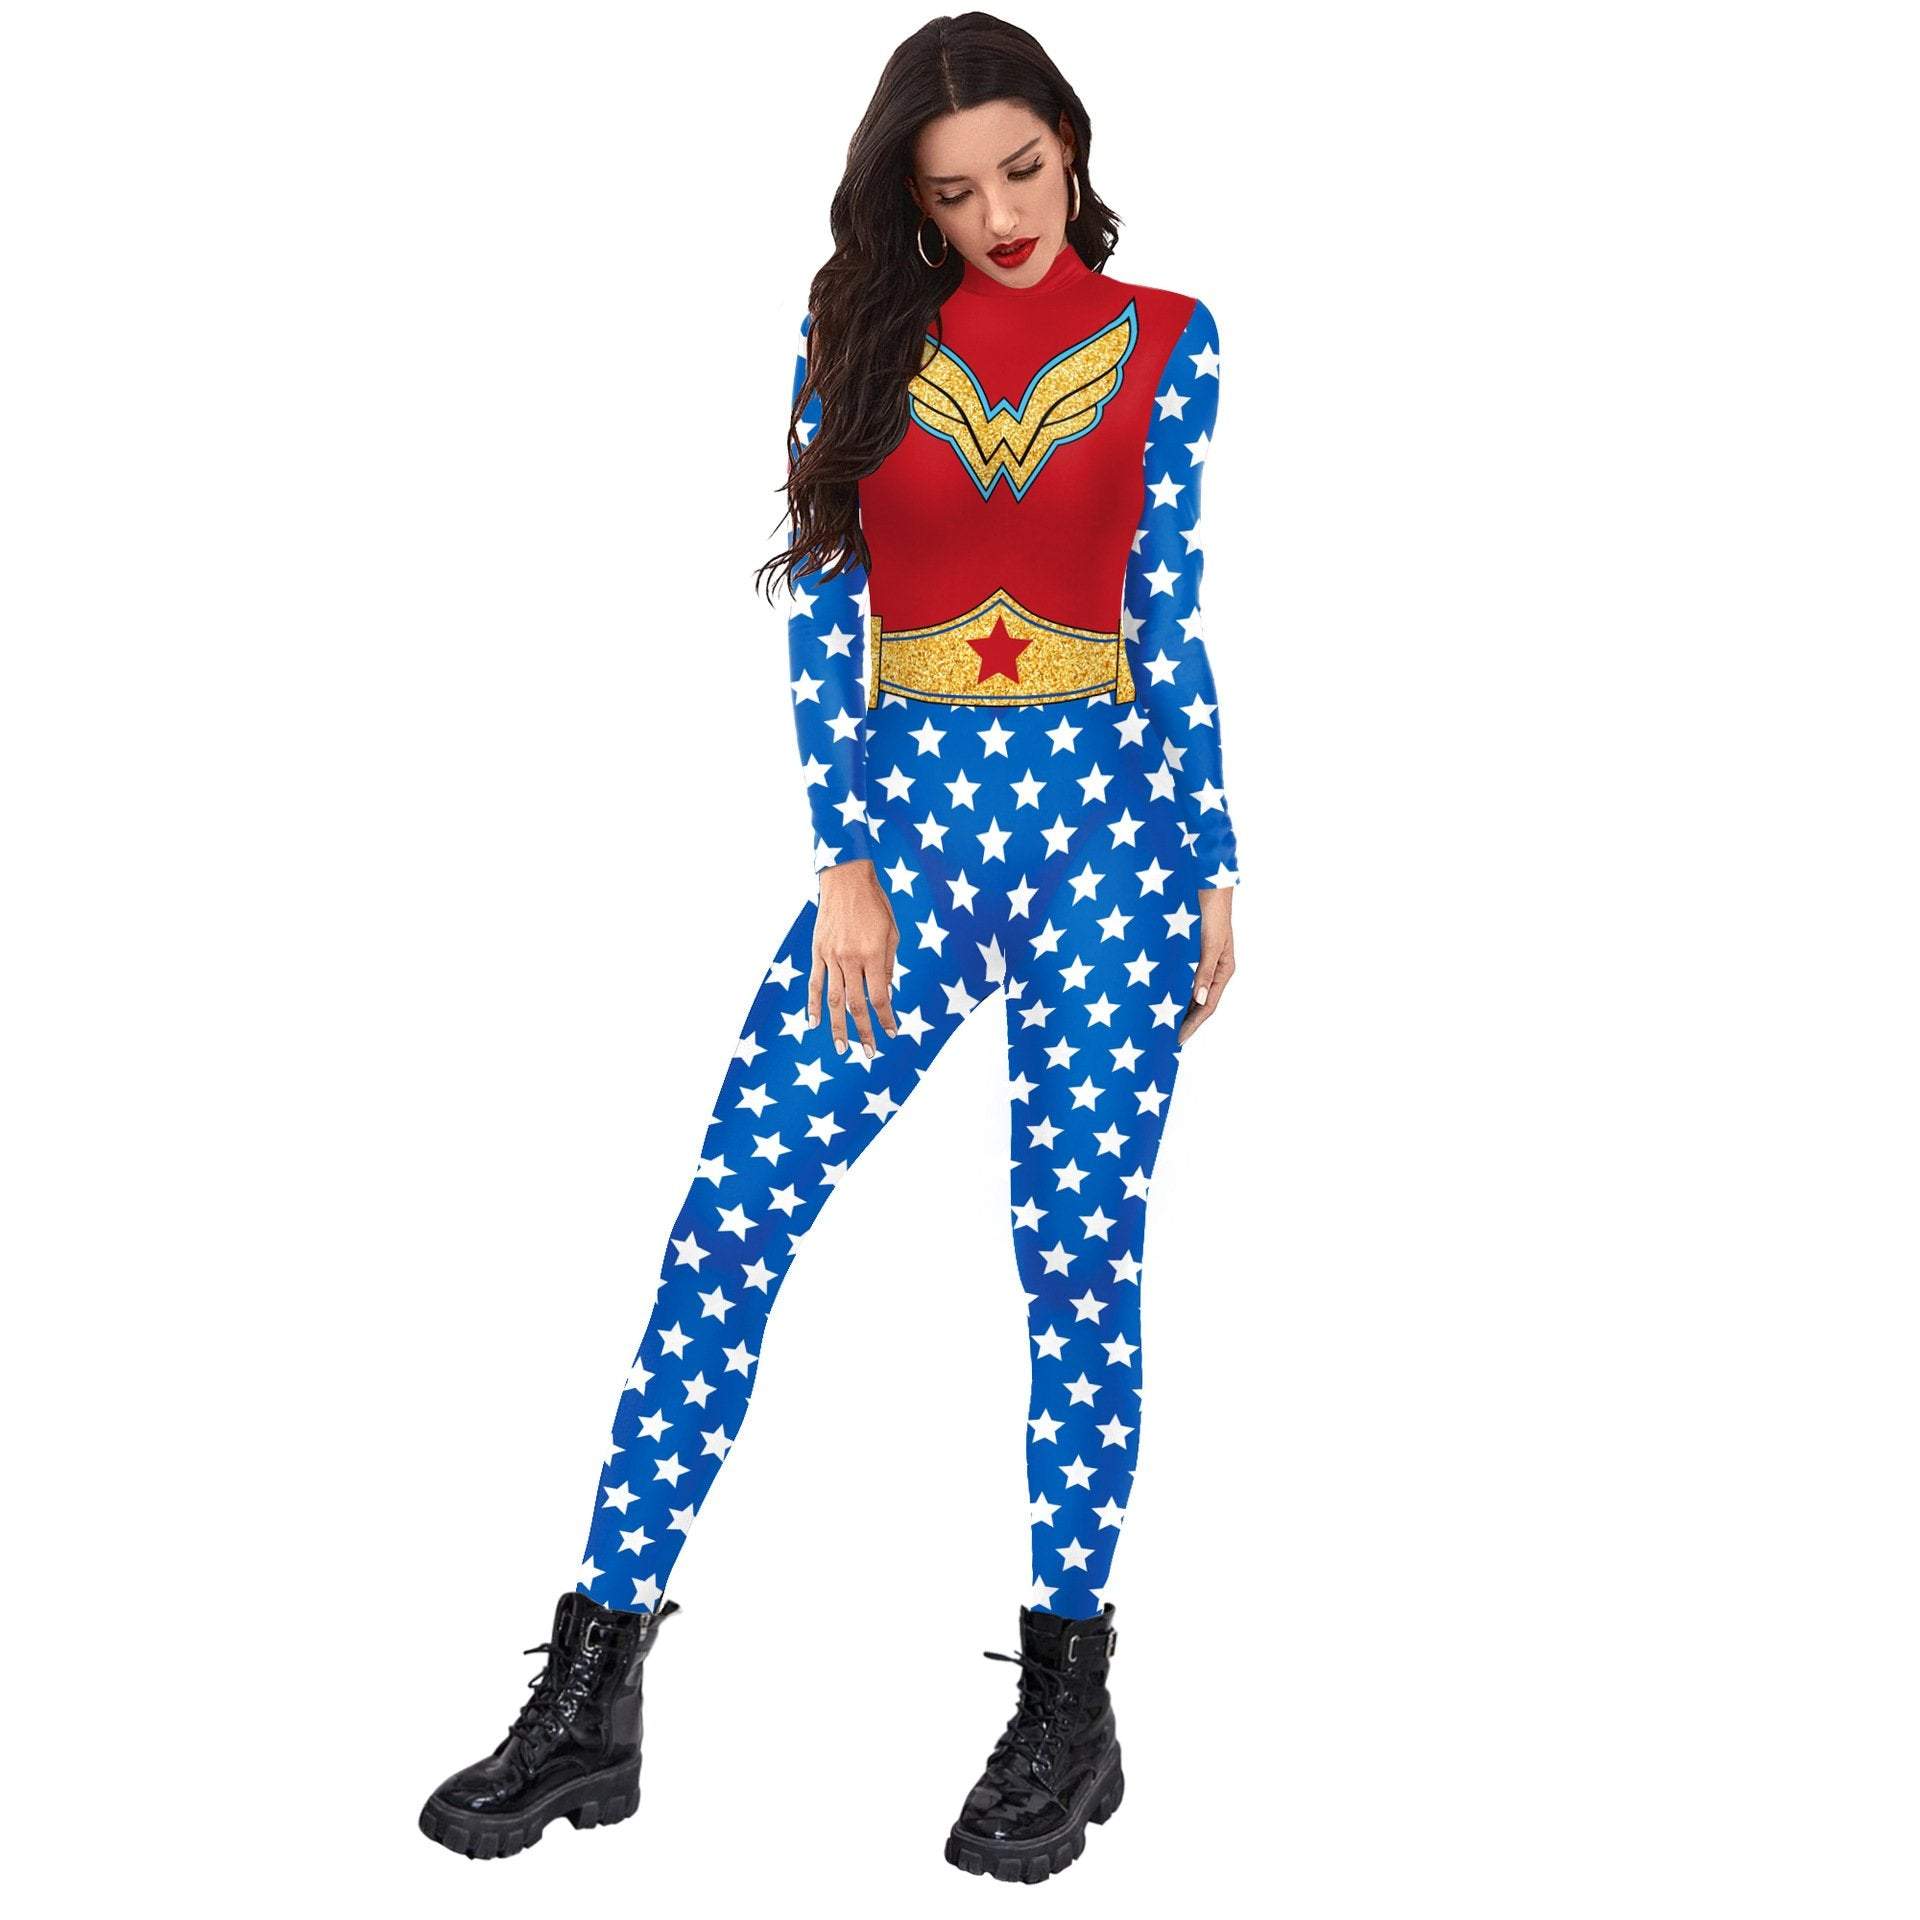 Superhero Wonder Woman Cosplay Costume Halloween Printed Jumpsuit Slim Fit Long Sleeve Party Outfit for Women-Pajamasbuy